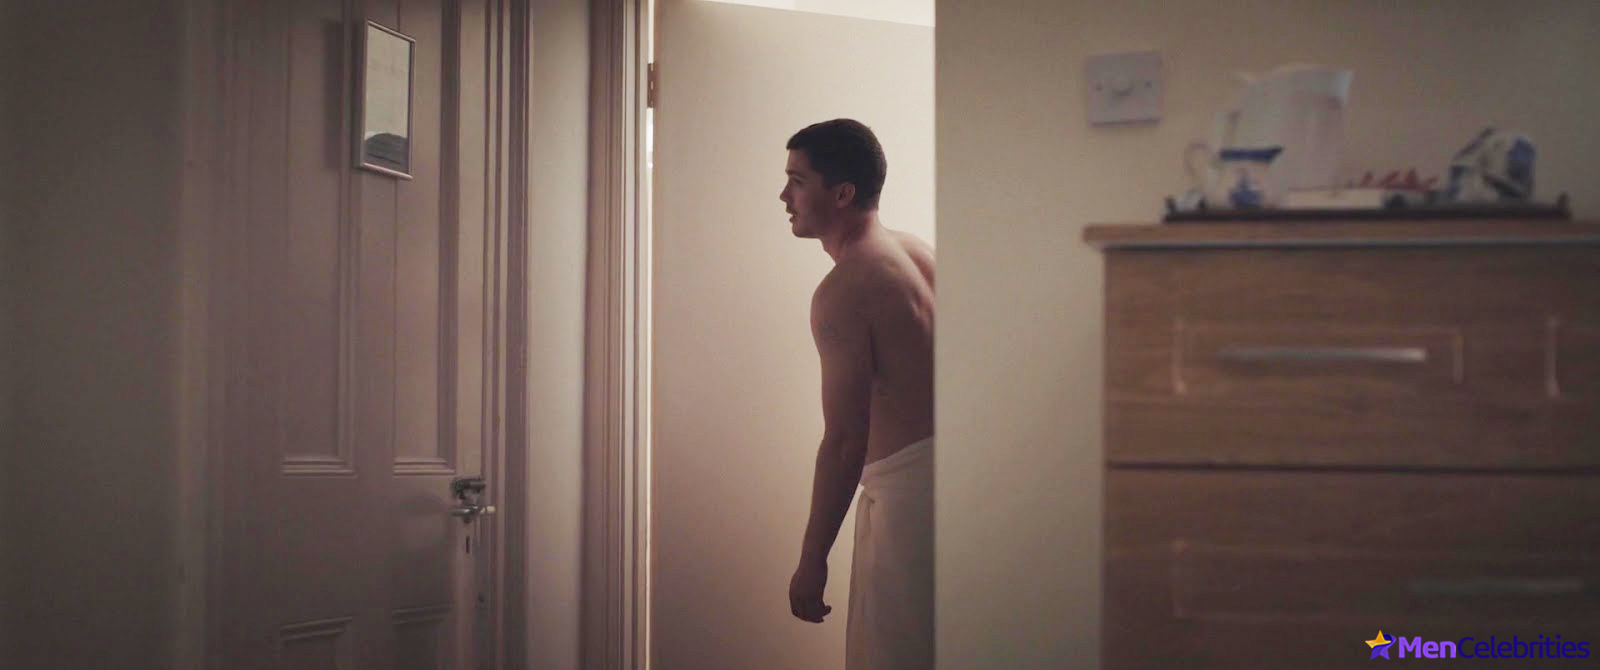 Logan Lerman naked movie scenes.